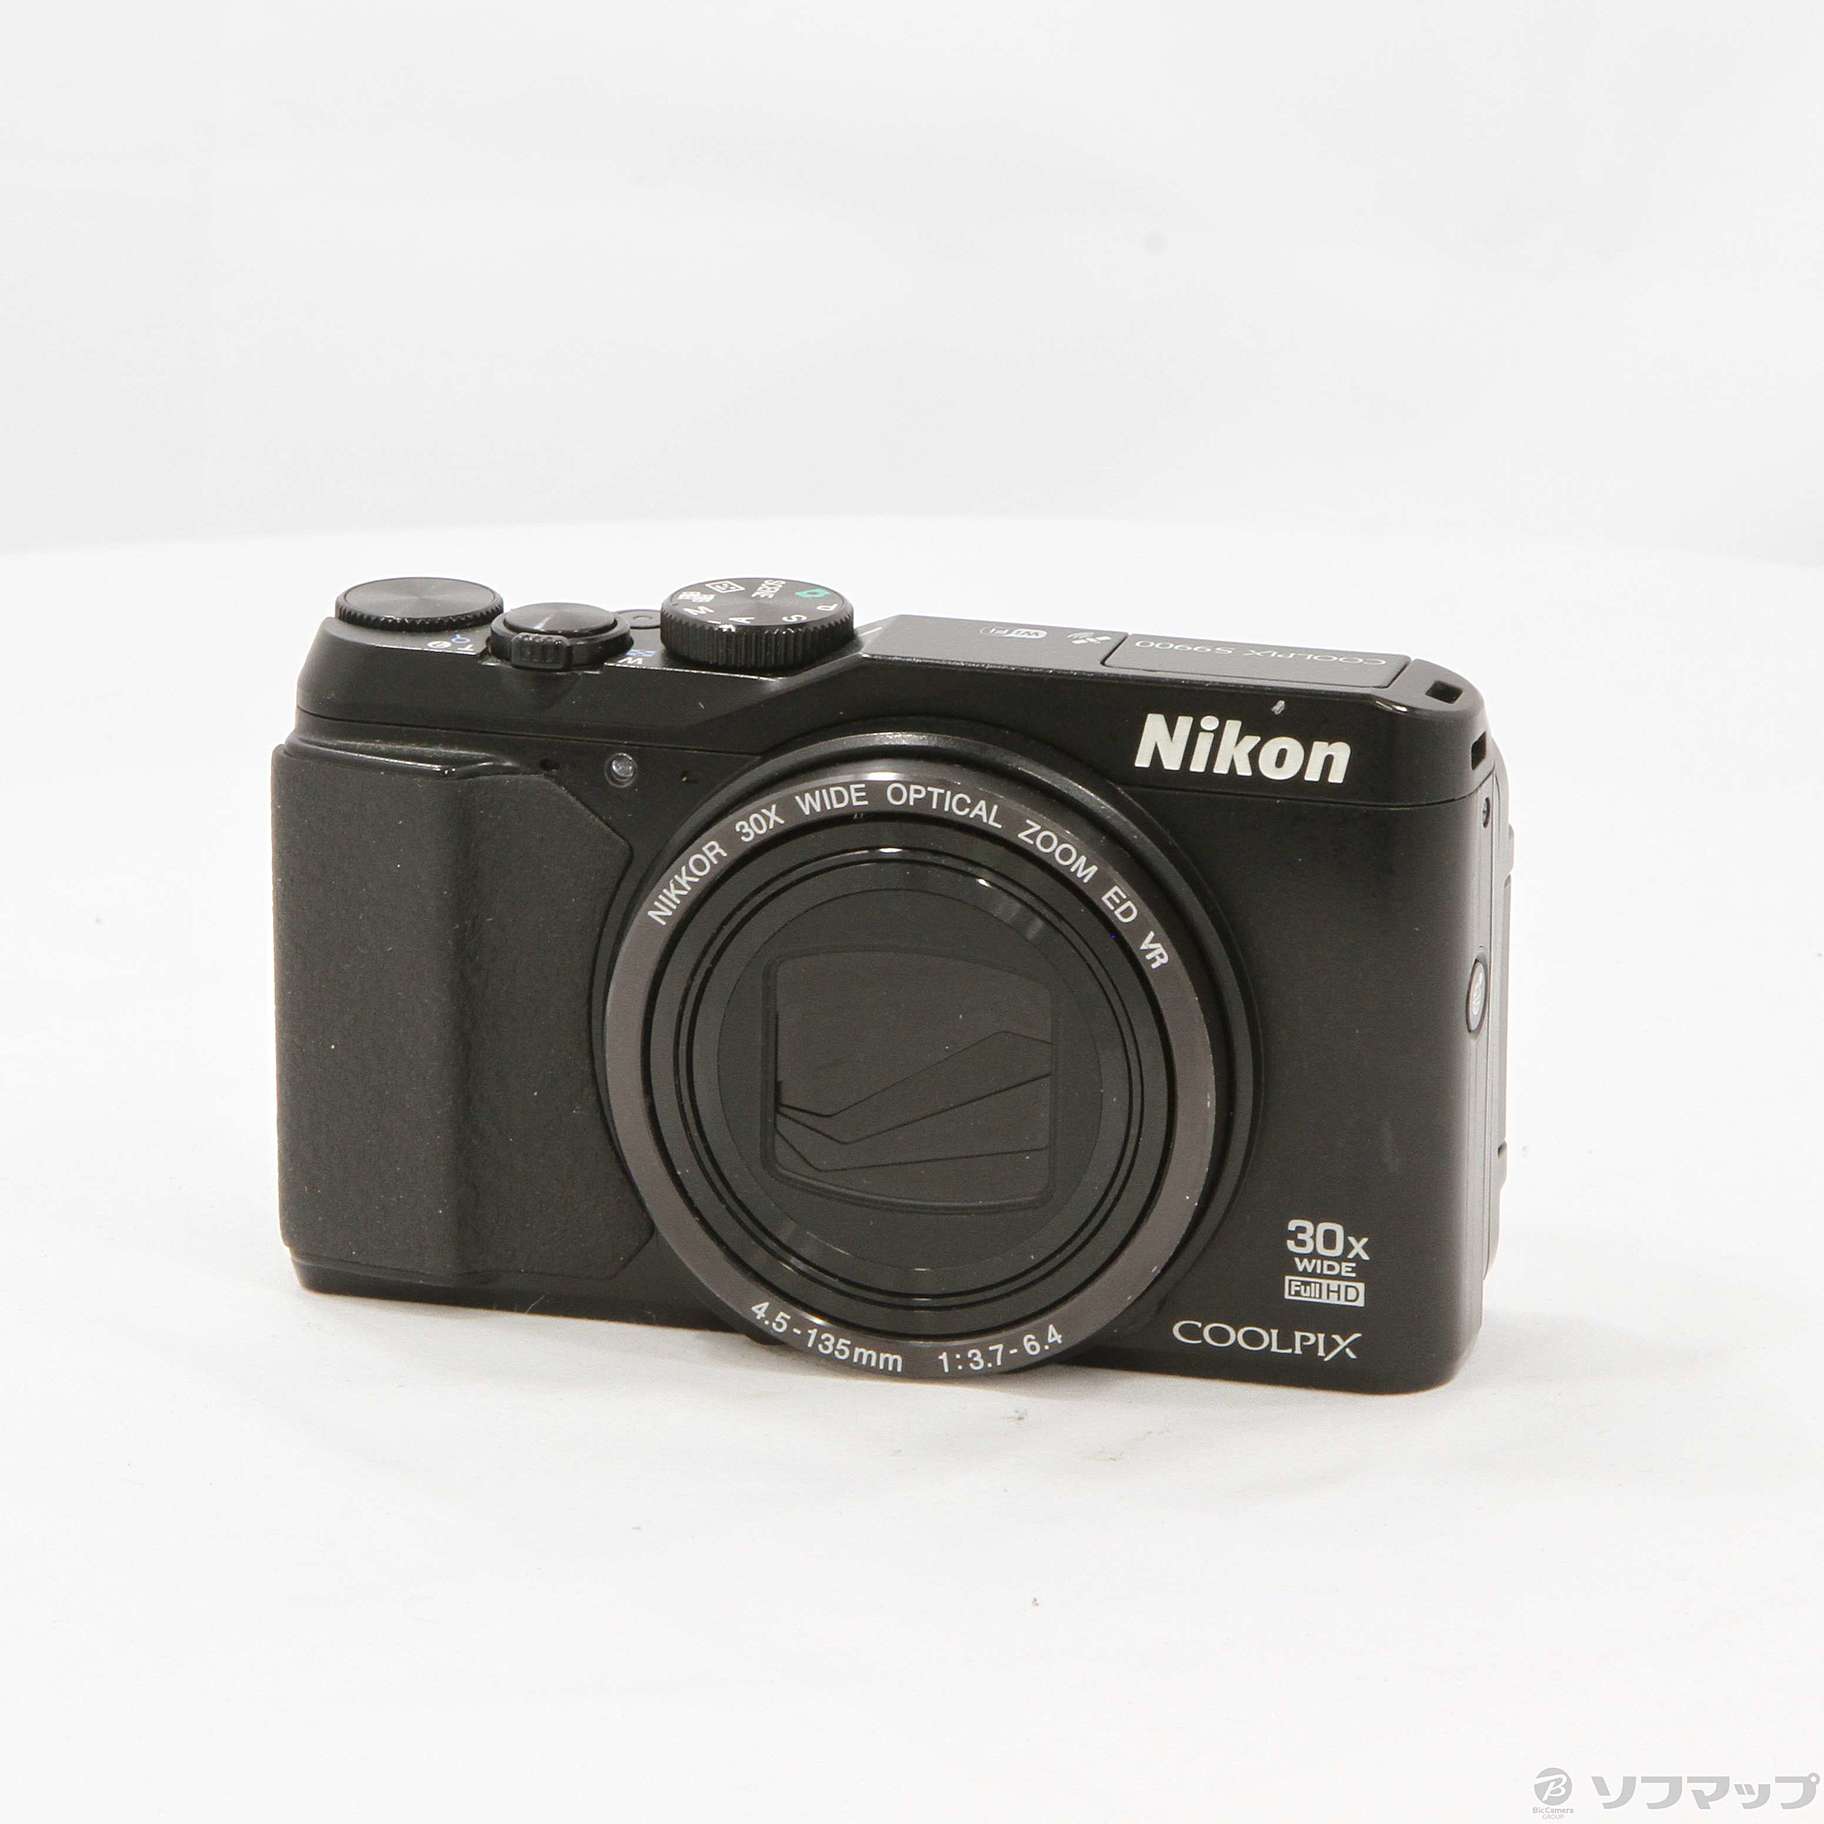 Nikon デジタルカメラ COOLPIX S9900 光学30倍 1605万画